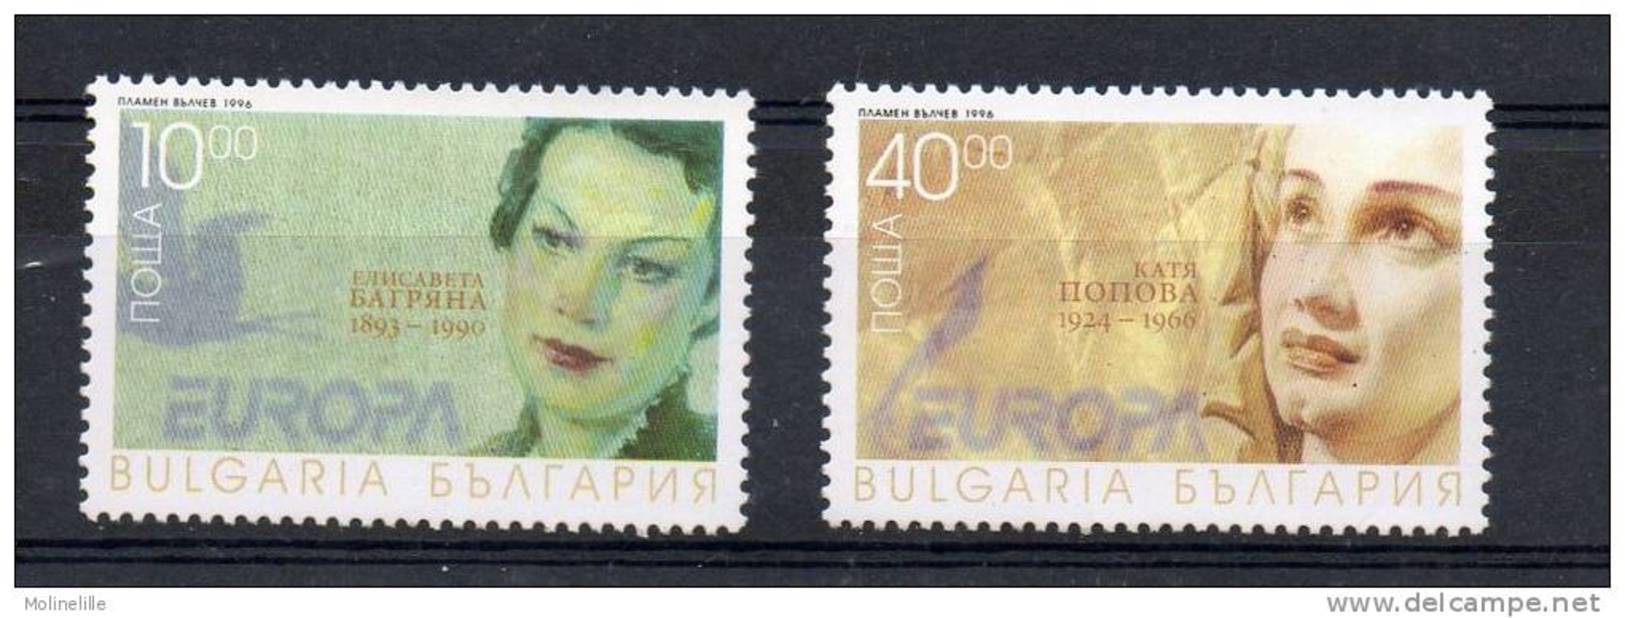 BULGARIE N°3651/52 ** - EUROPA 1996 "FEMMES CELEBRES" Cote 5.50 € - 1996